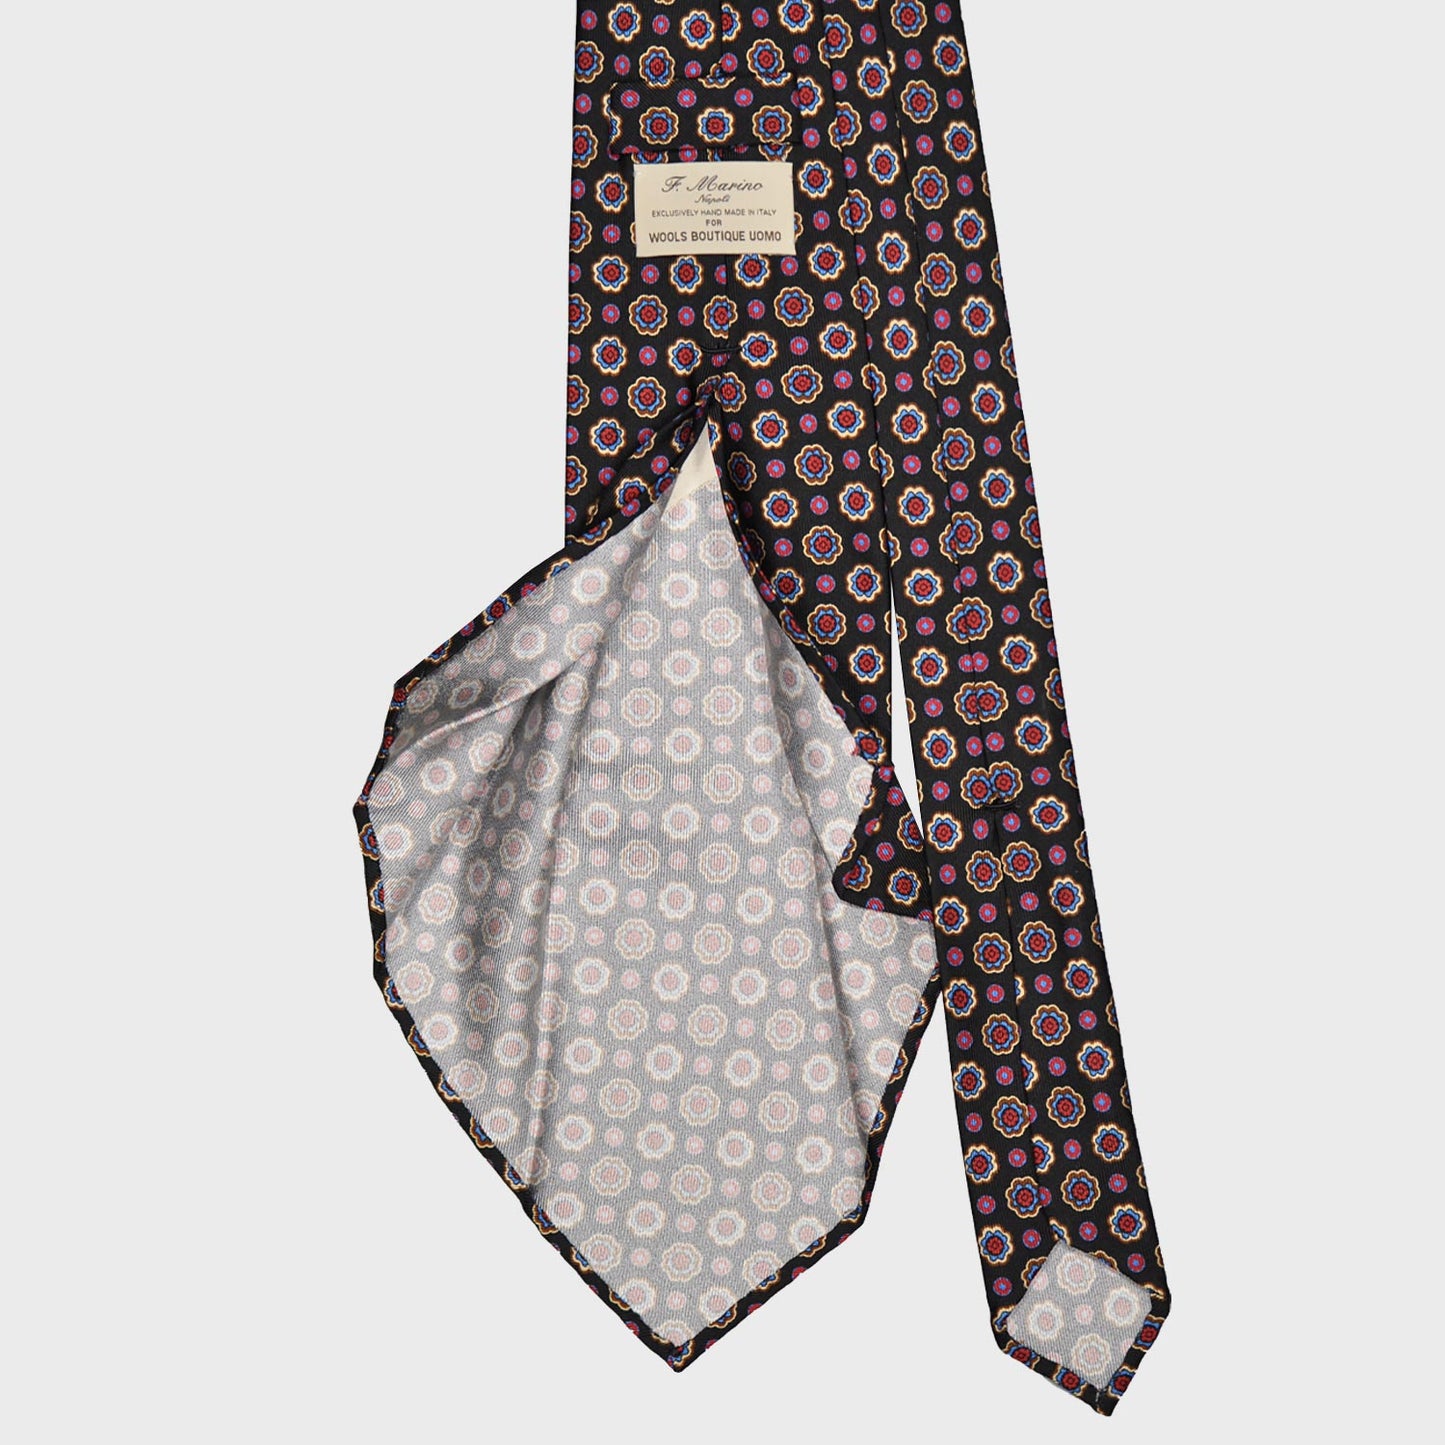 F.Marino Madder Silk Tie 7 Folds Daisy Black-Wools Boutique Uomo